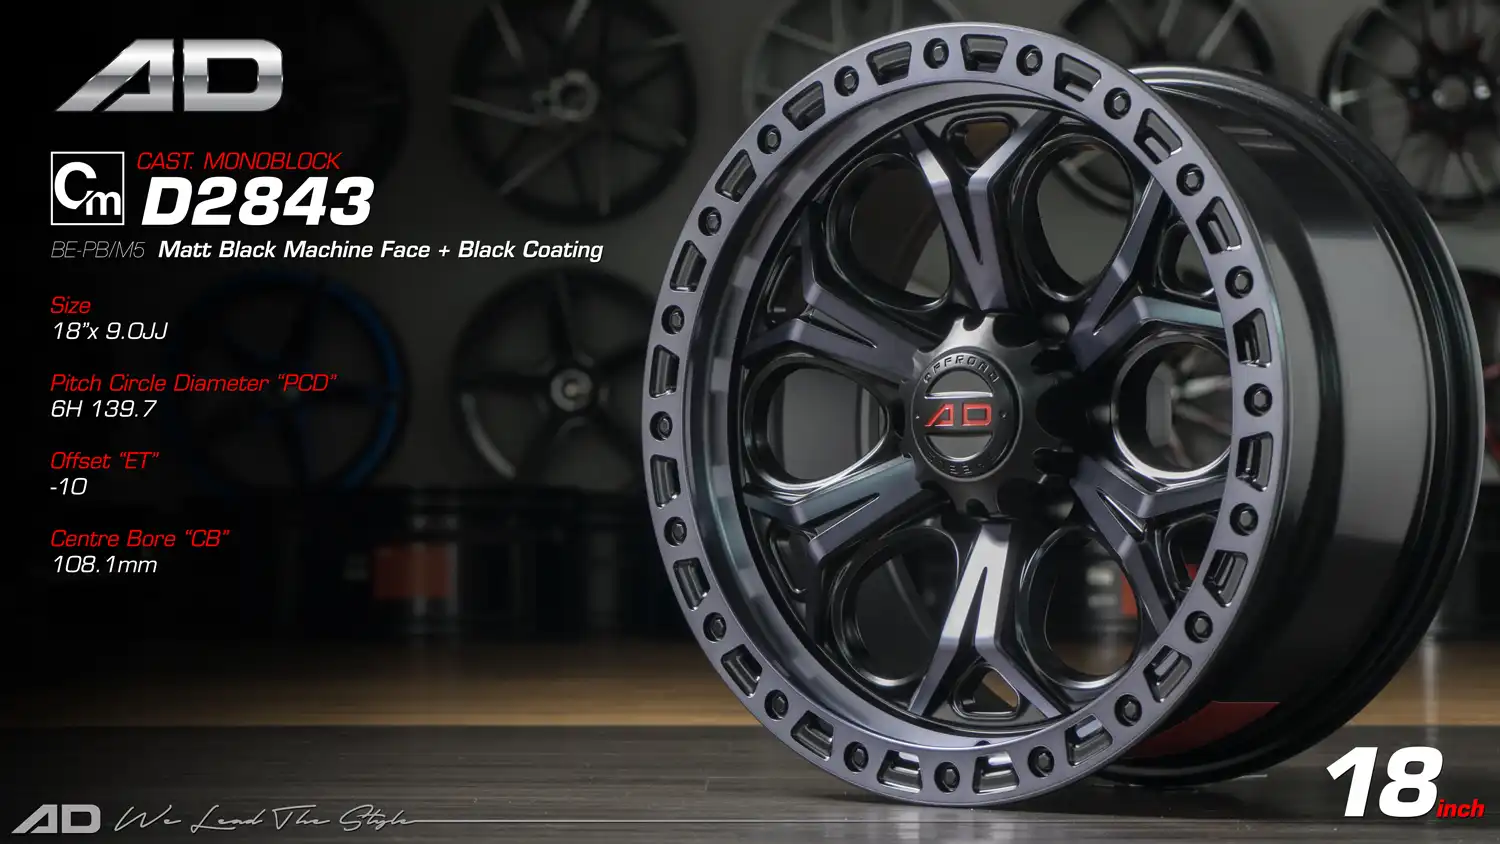 Ad wheels | Cast Monoblock 2843 18 inch 6H139.7